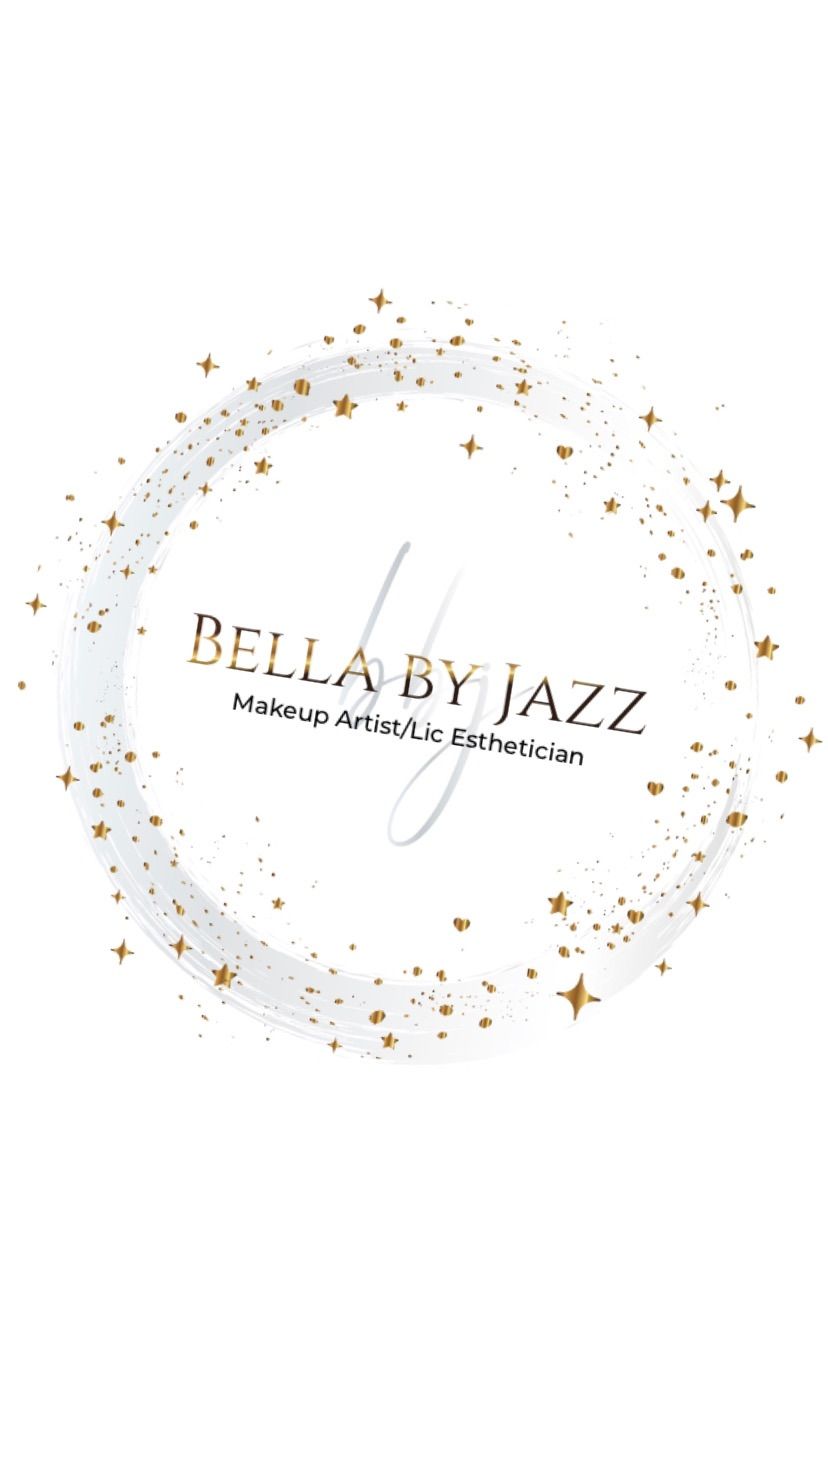 Bella by Jazz